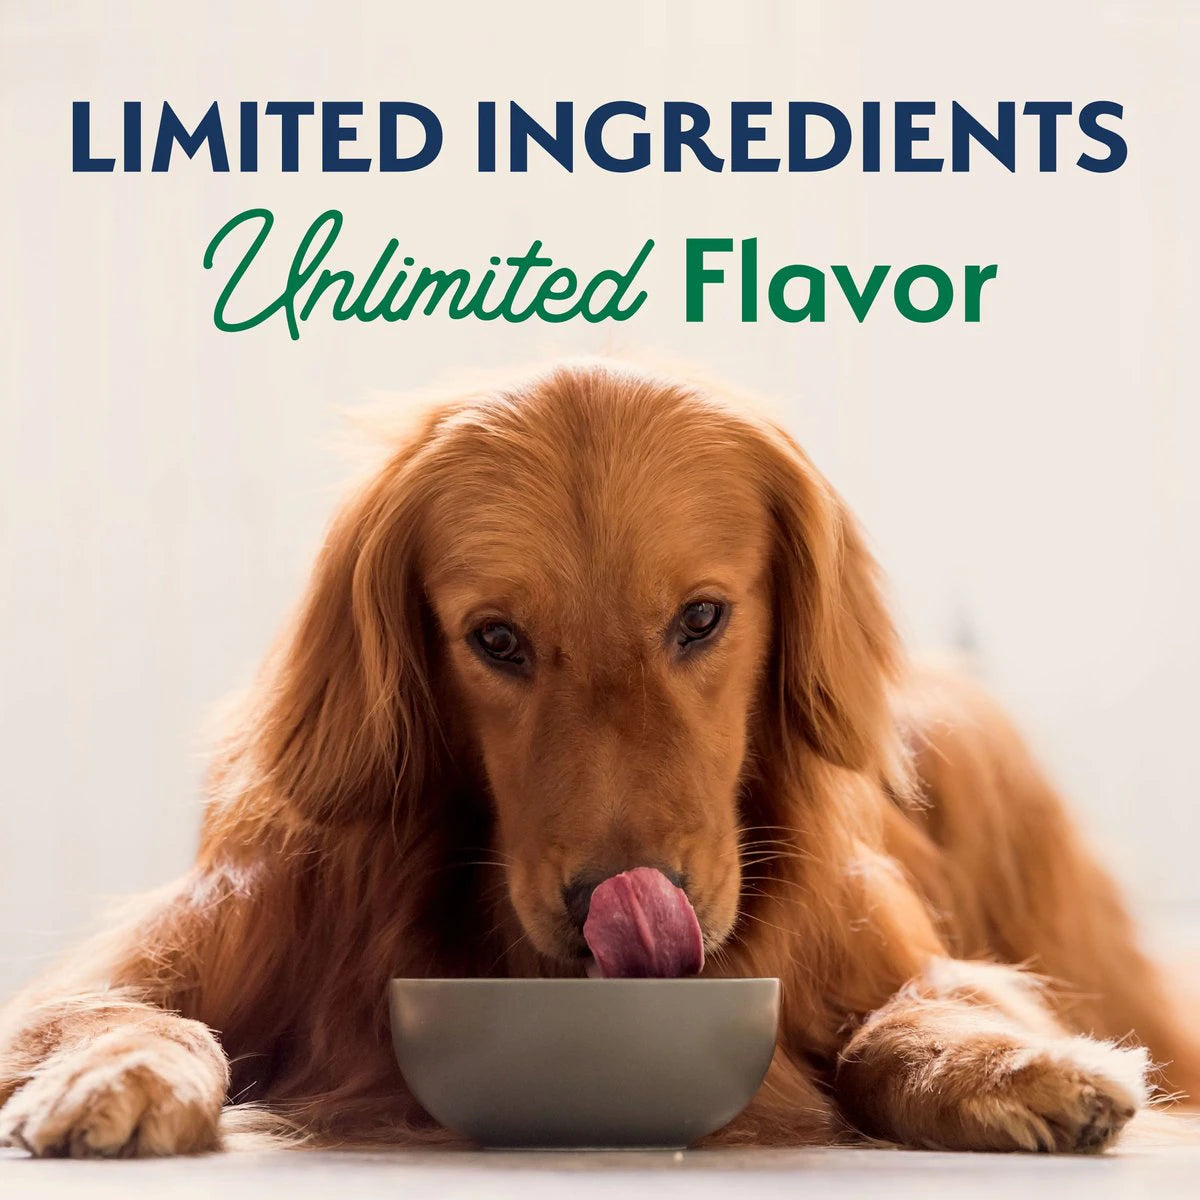 Natural Balance® Limited Ingredient Diets® Lamb & Brown Rice Adult Formula, Dry Dog Food